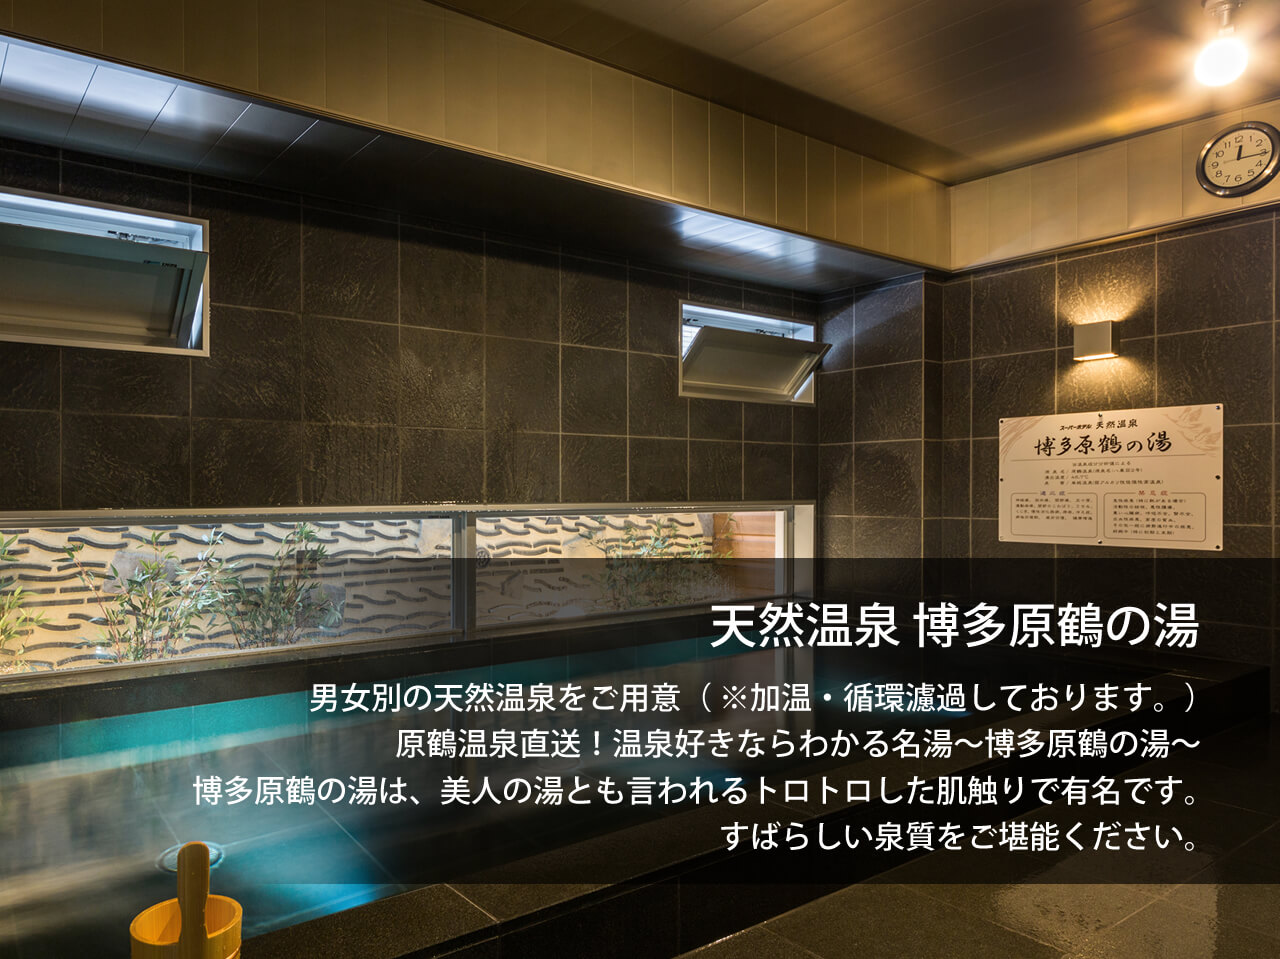 Super Hotel Lohas Hakata Station-Chikushi Exit Natural Hot Springs